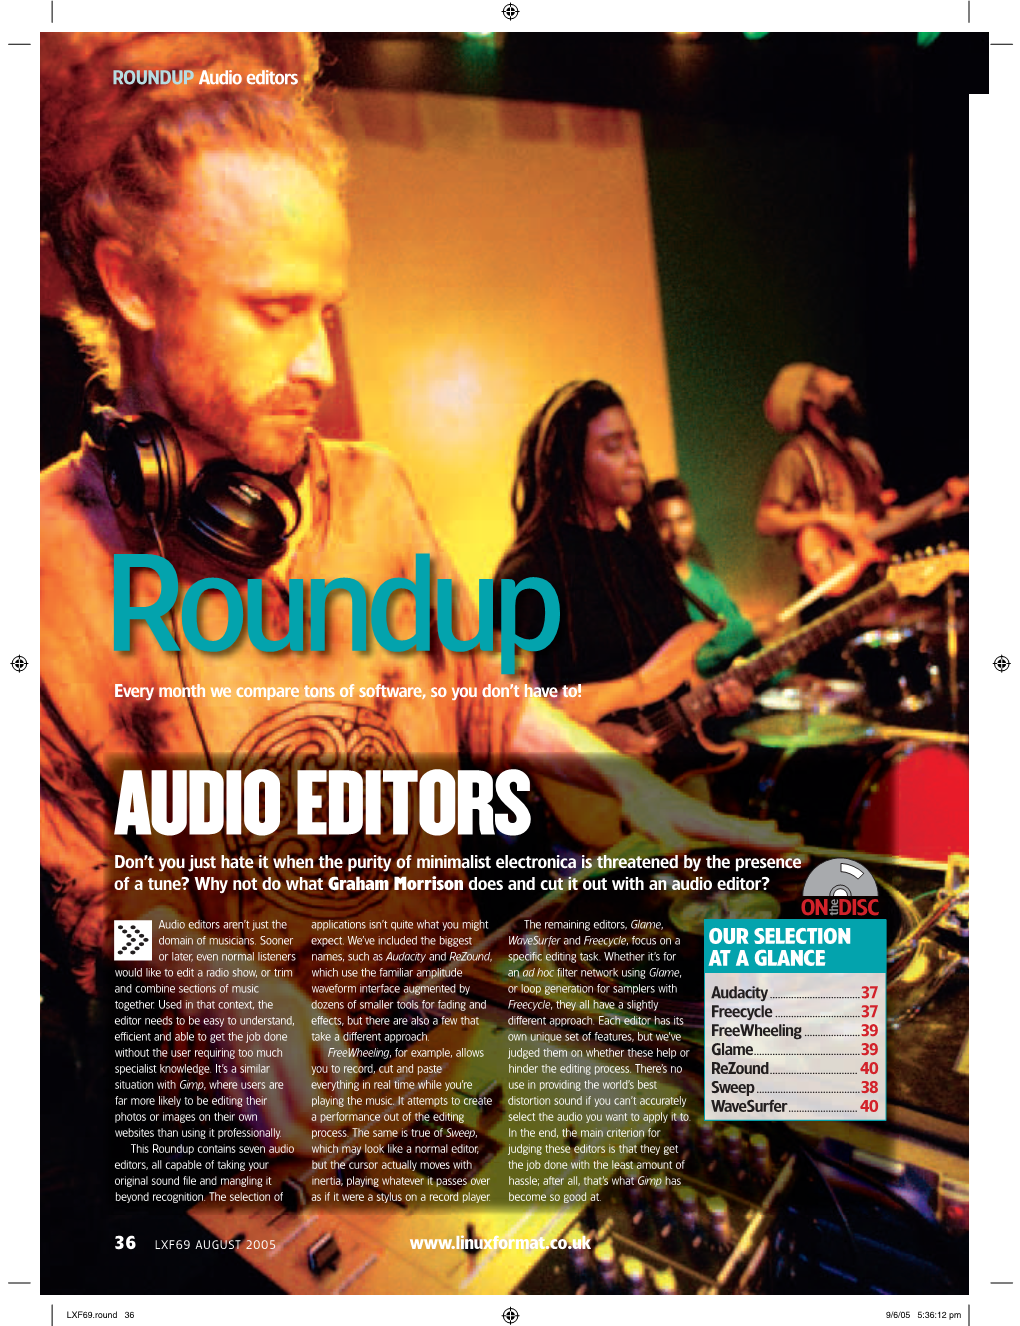 Audio Editors